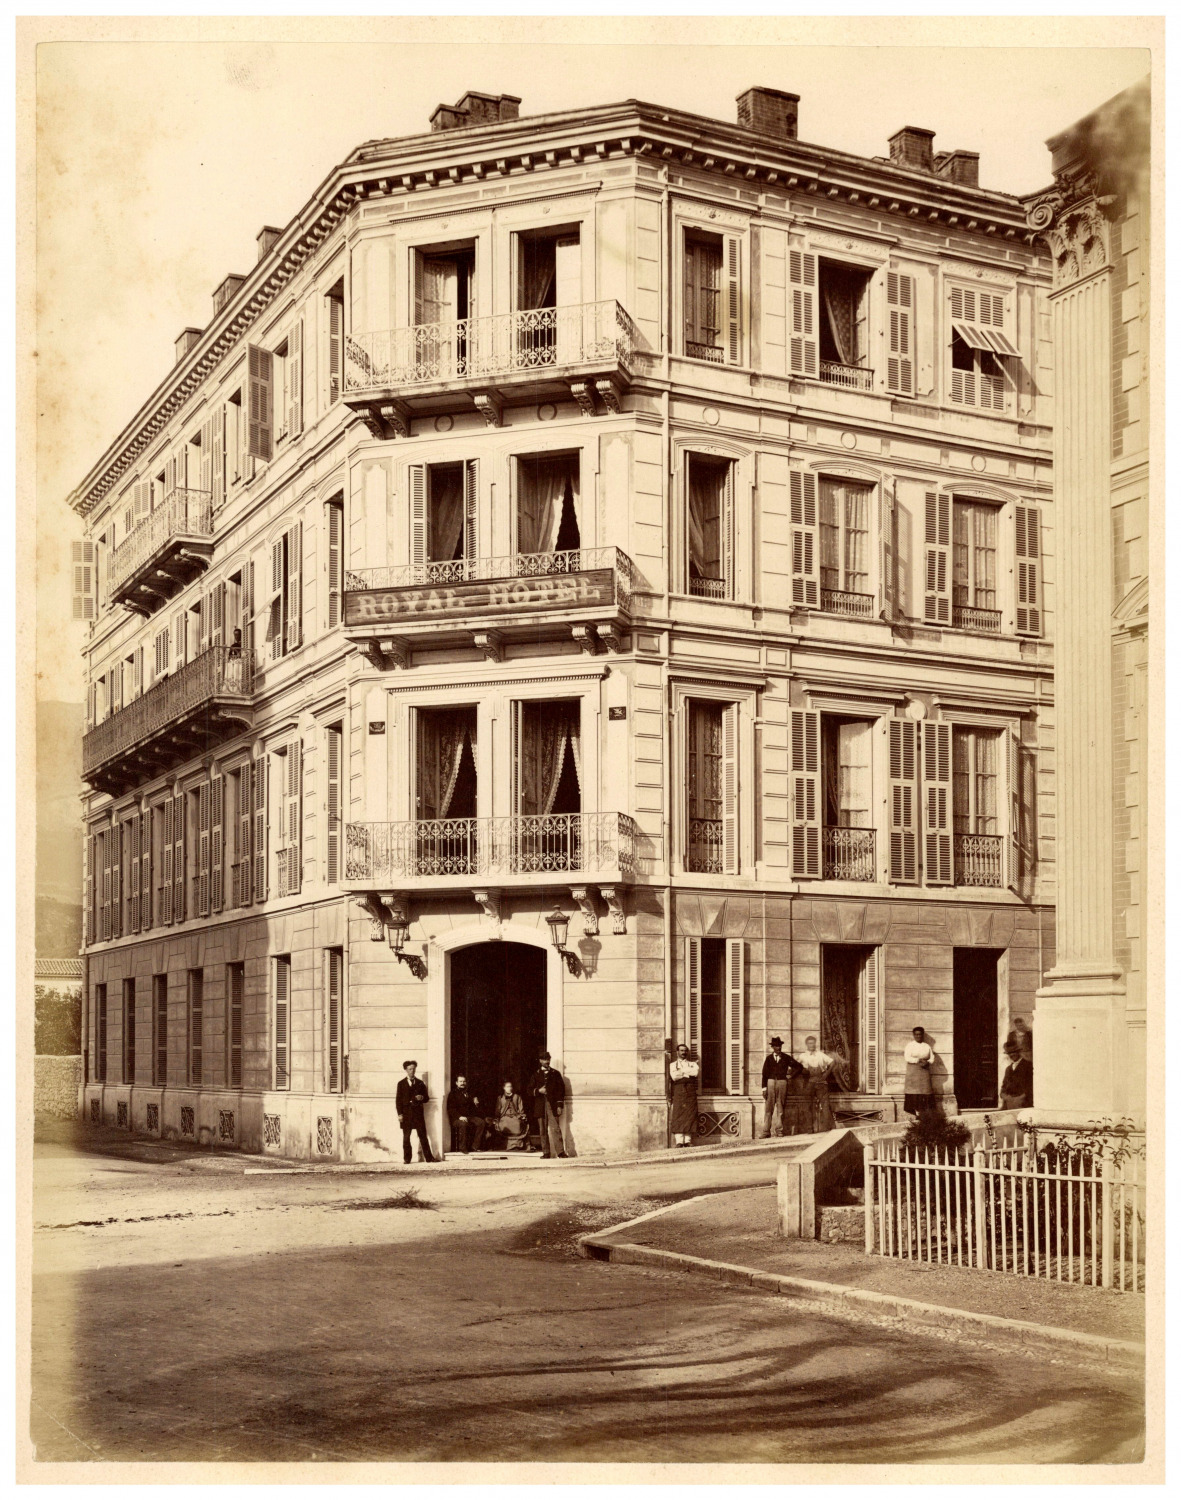 France, Paris, Hotel Royal Vintage Print, Albumin Print 29x22.5 Circa